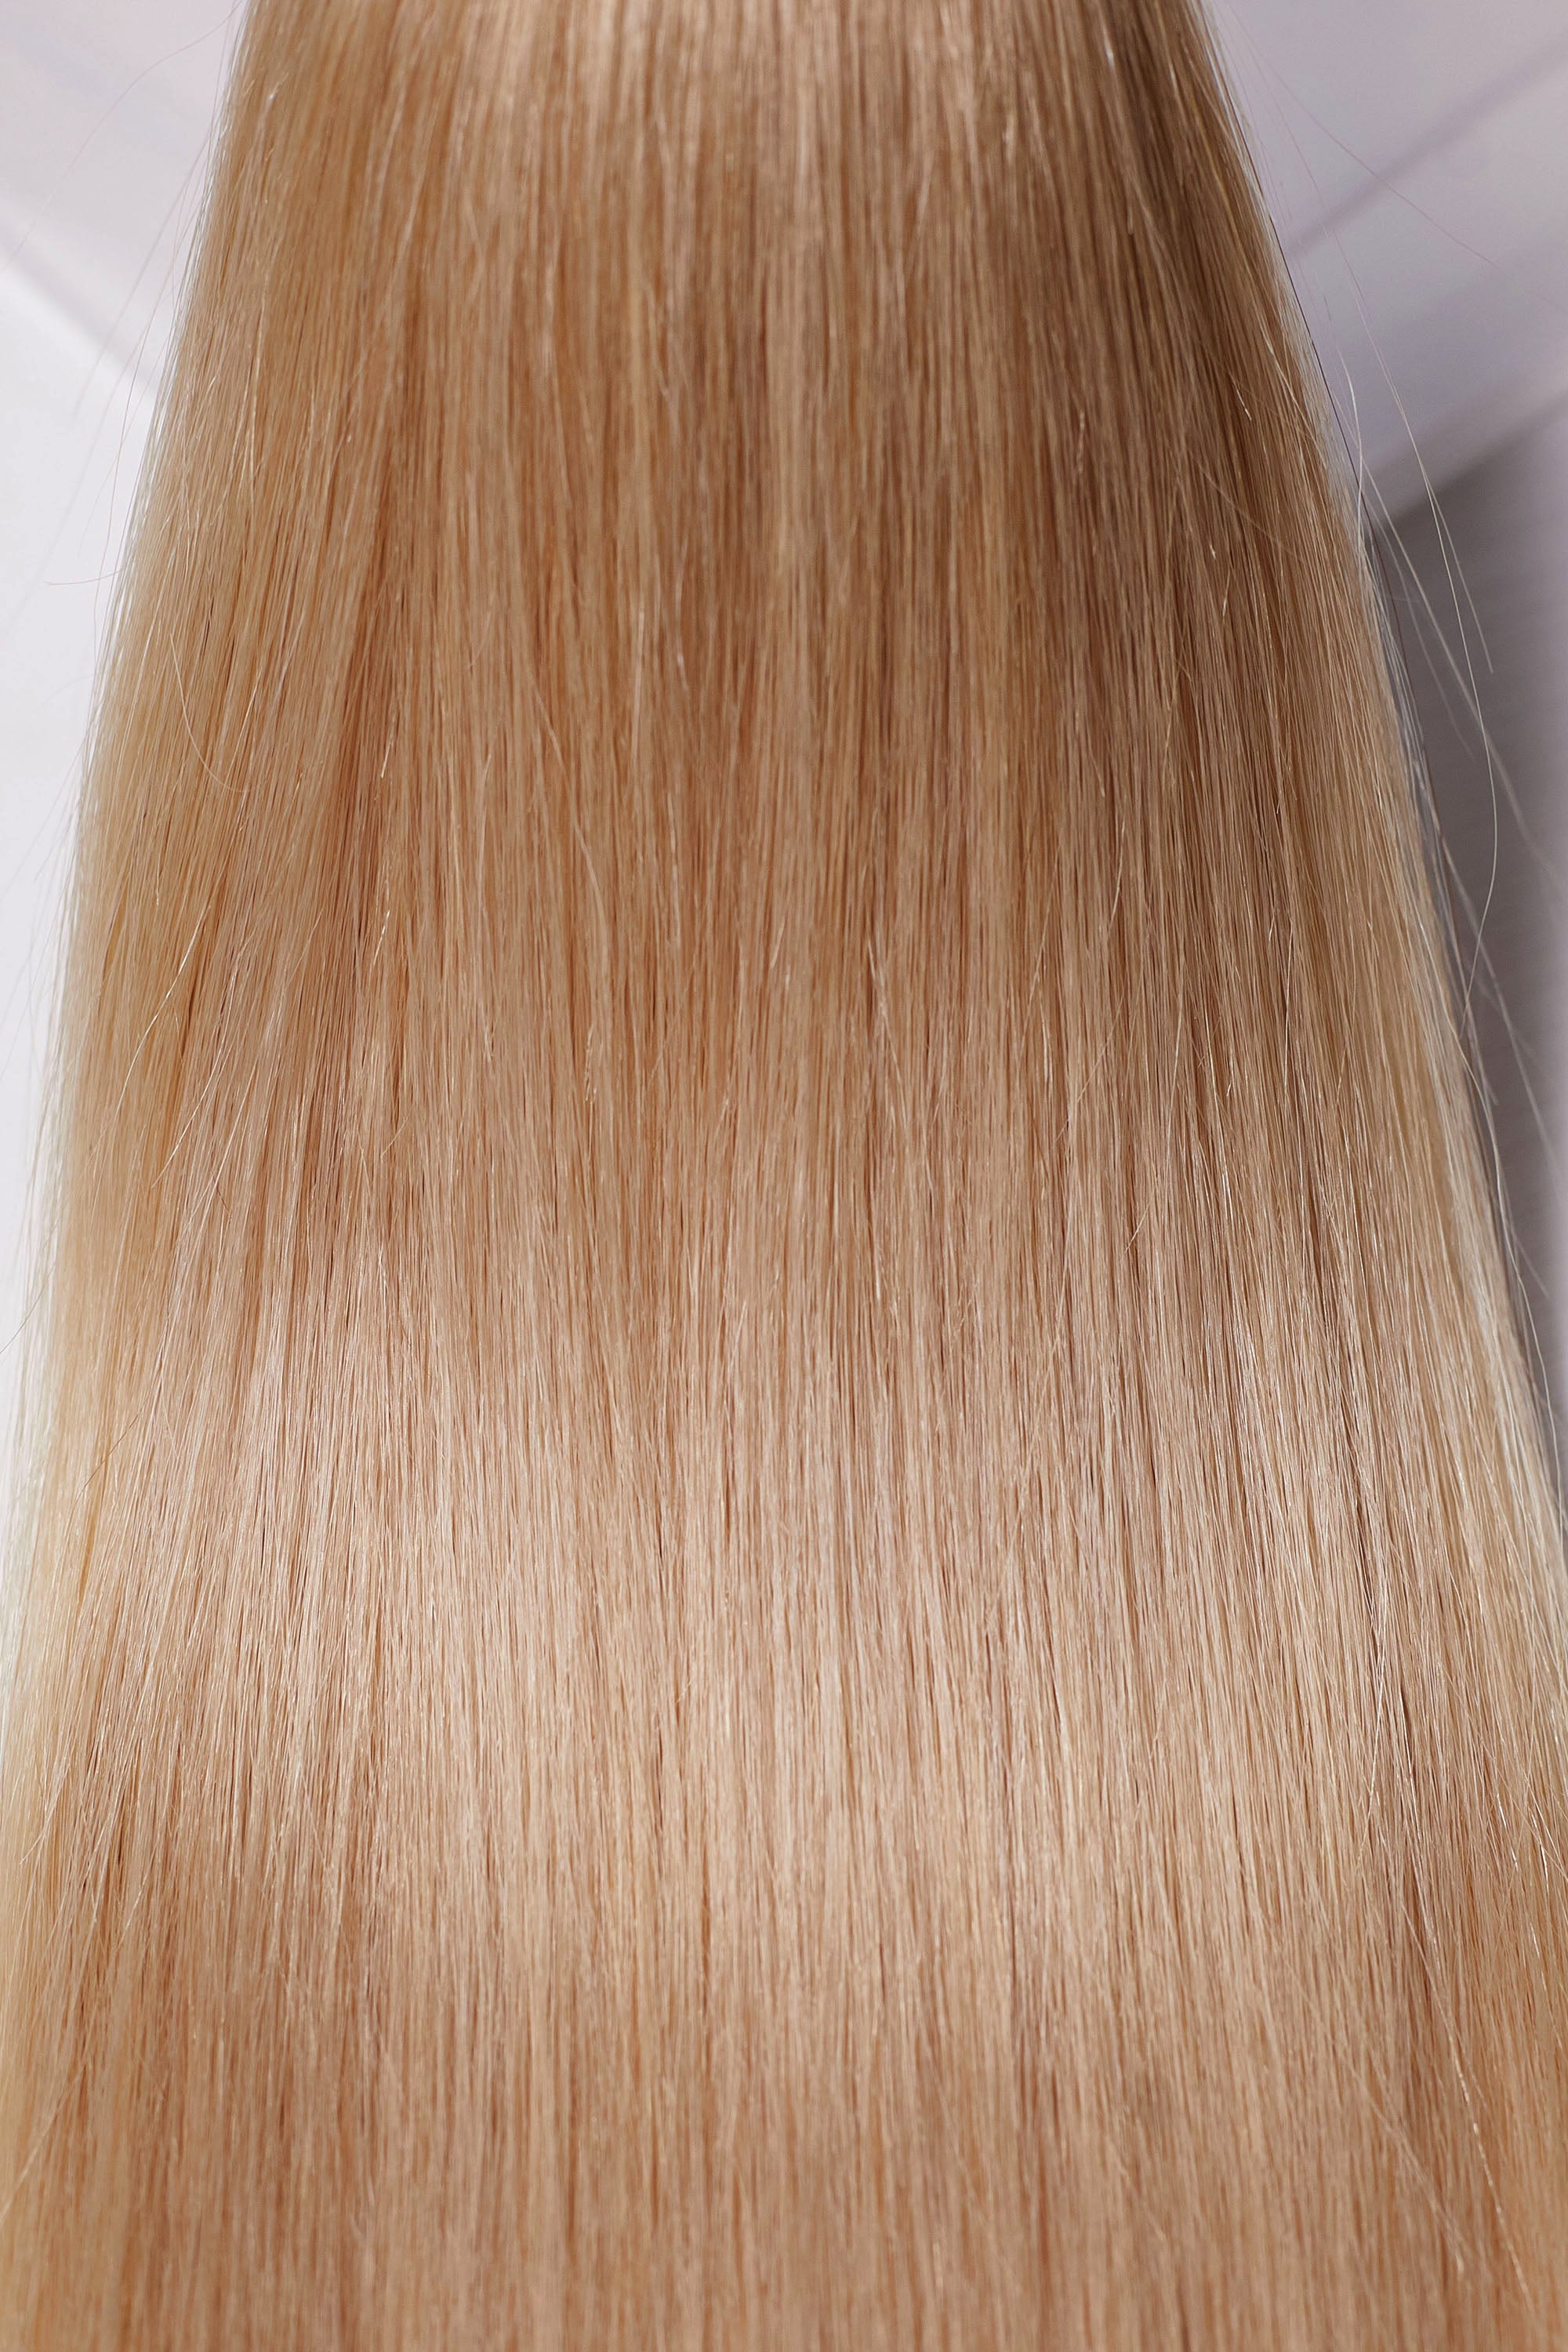 Behair professional Bulk hair "Premium" 16" (40cm) Natural Straight Light Gold Sand #16 - 25g hair extensions